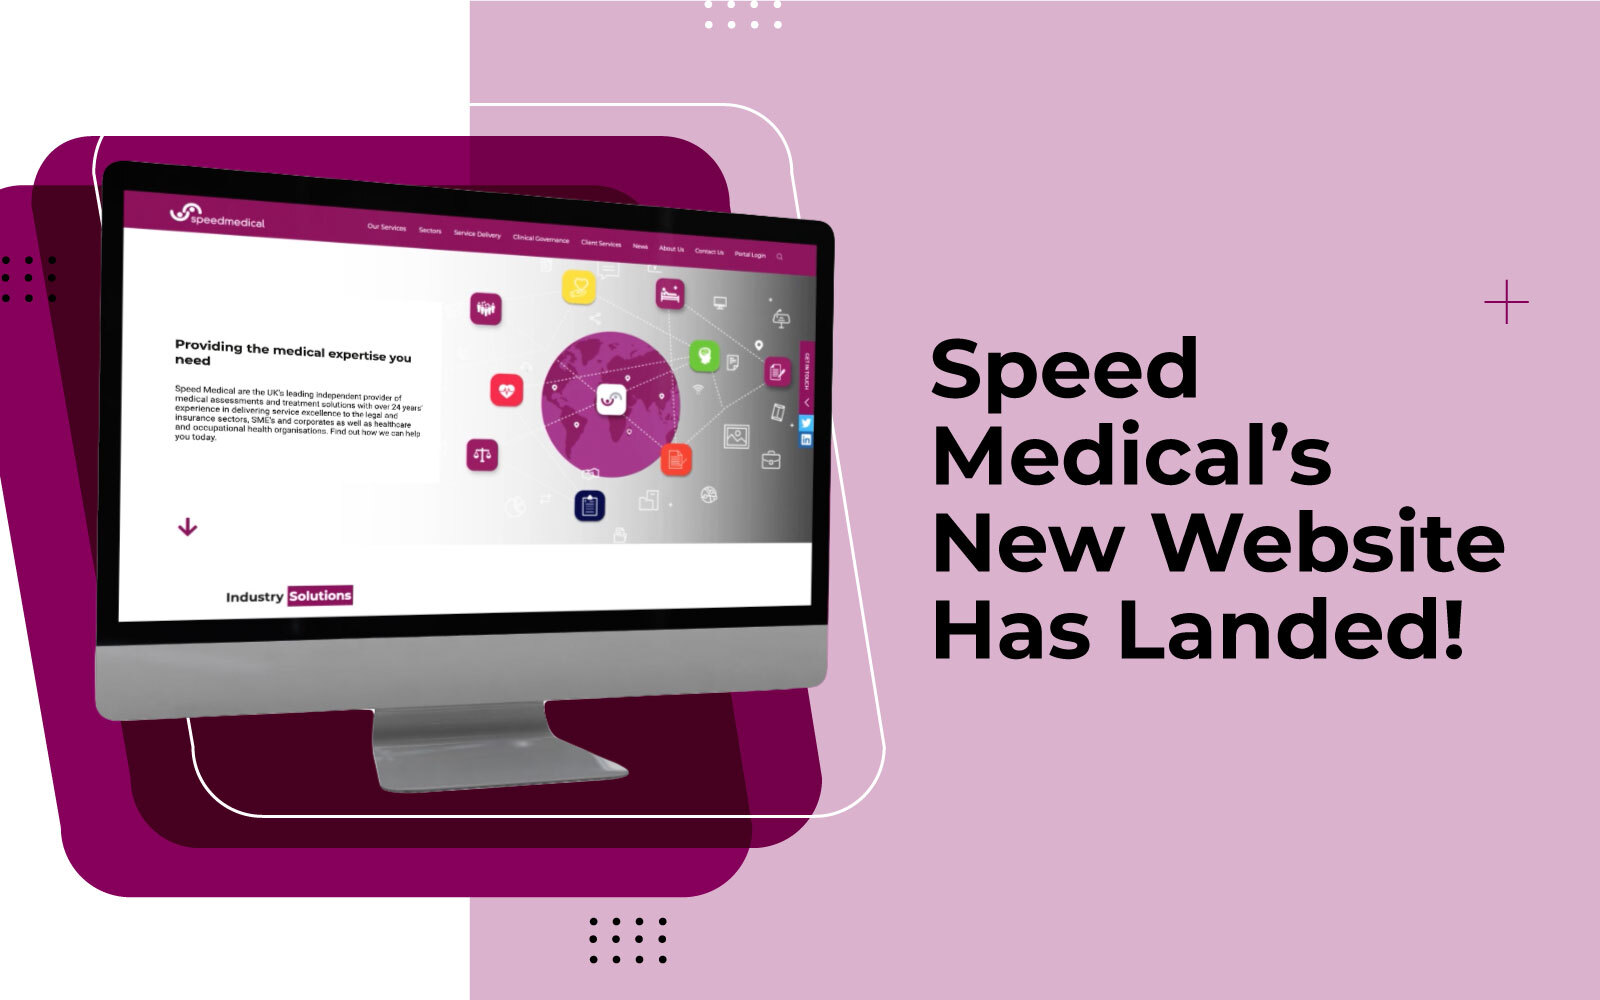 Speed Medical’s New Website Has Landed!